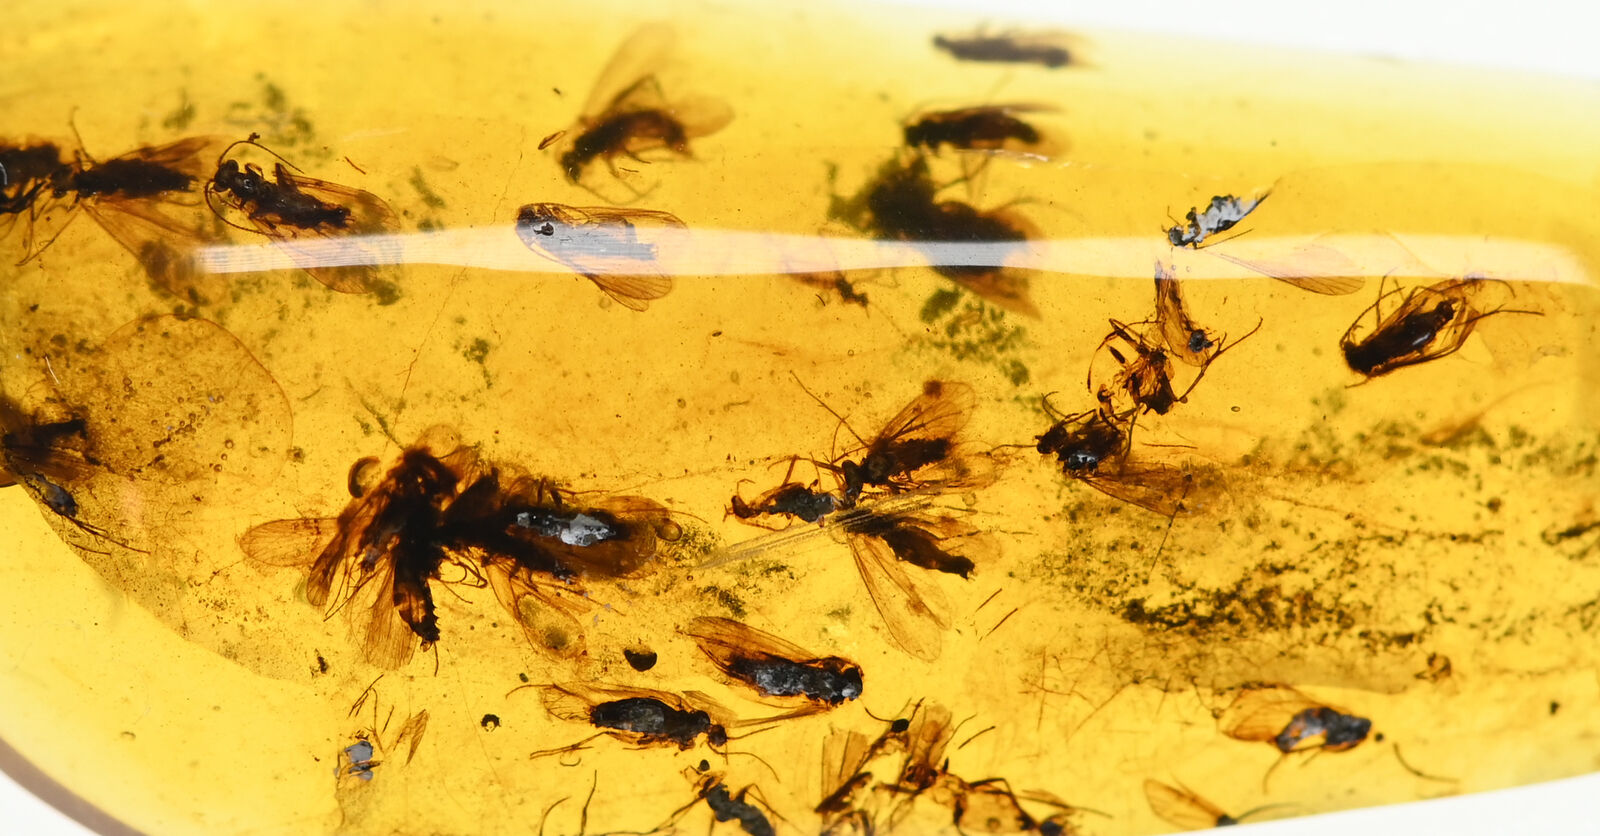 Large swarm of Trichoptera (Caddisfly) in Burmese Amber